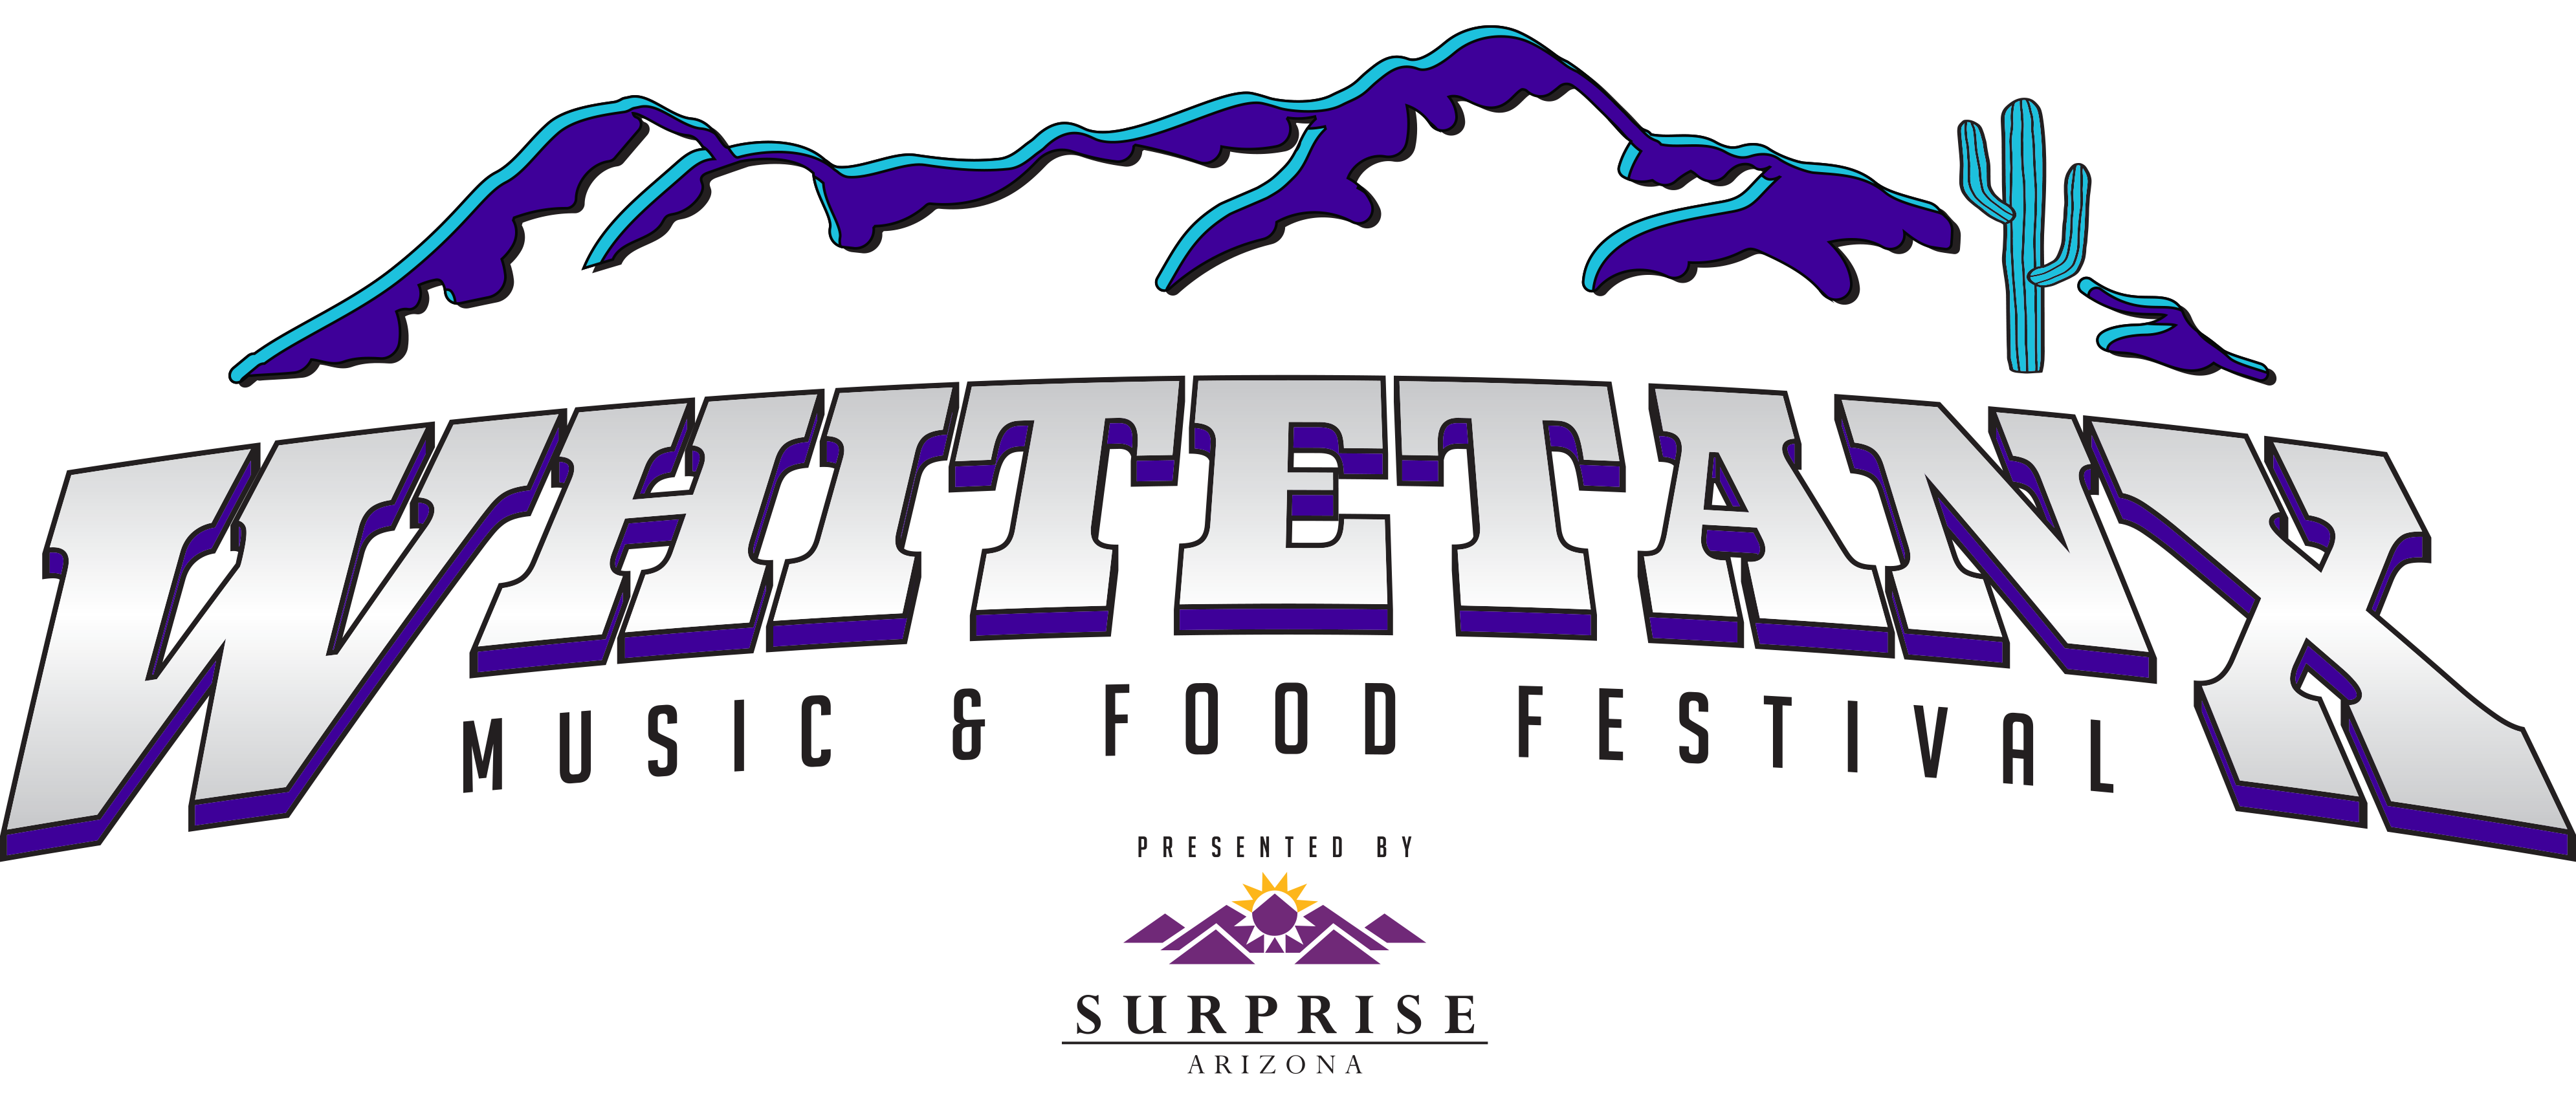 WhitetanX Food & Music Festival